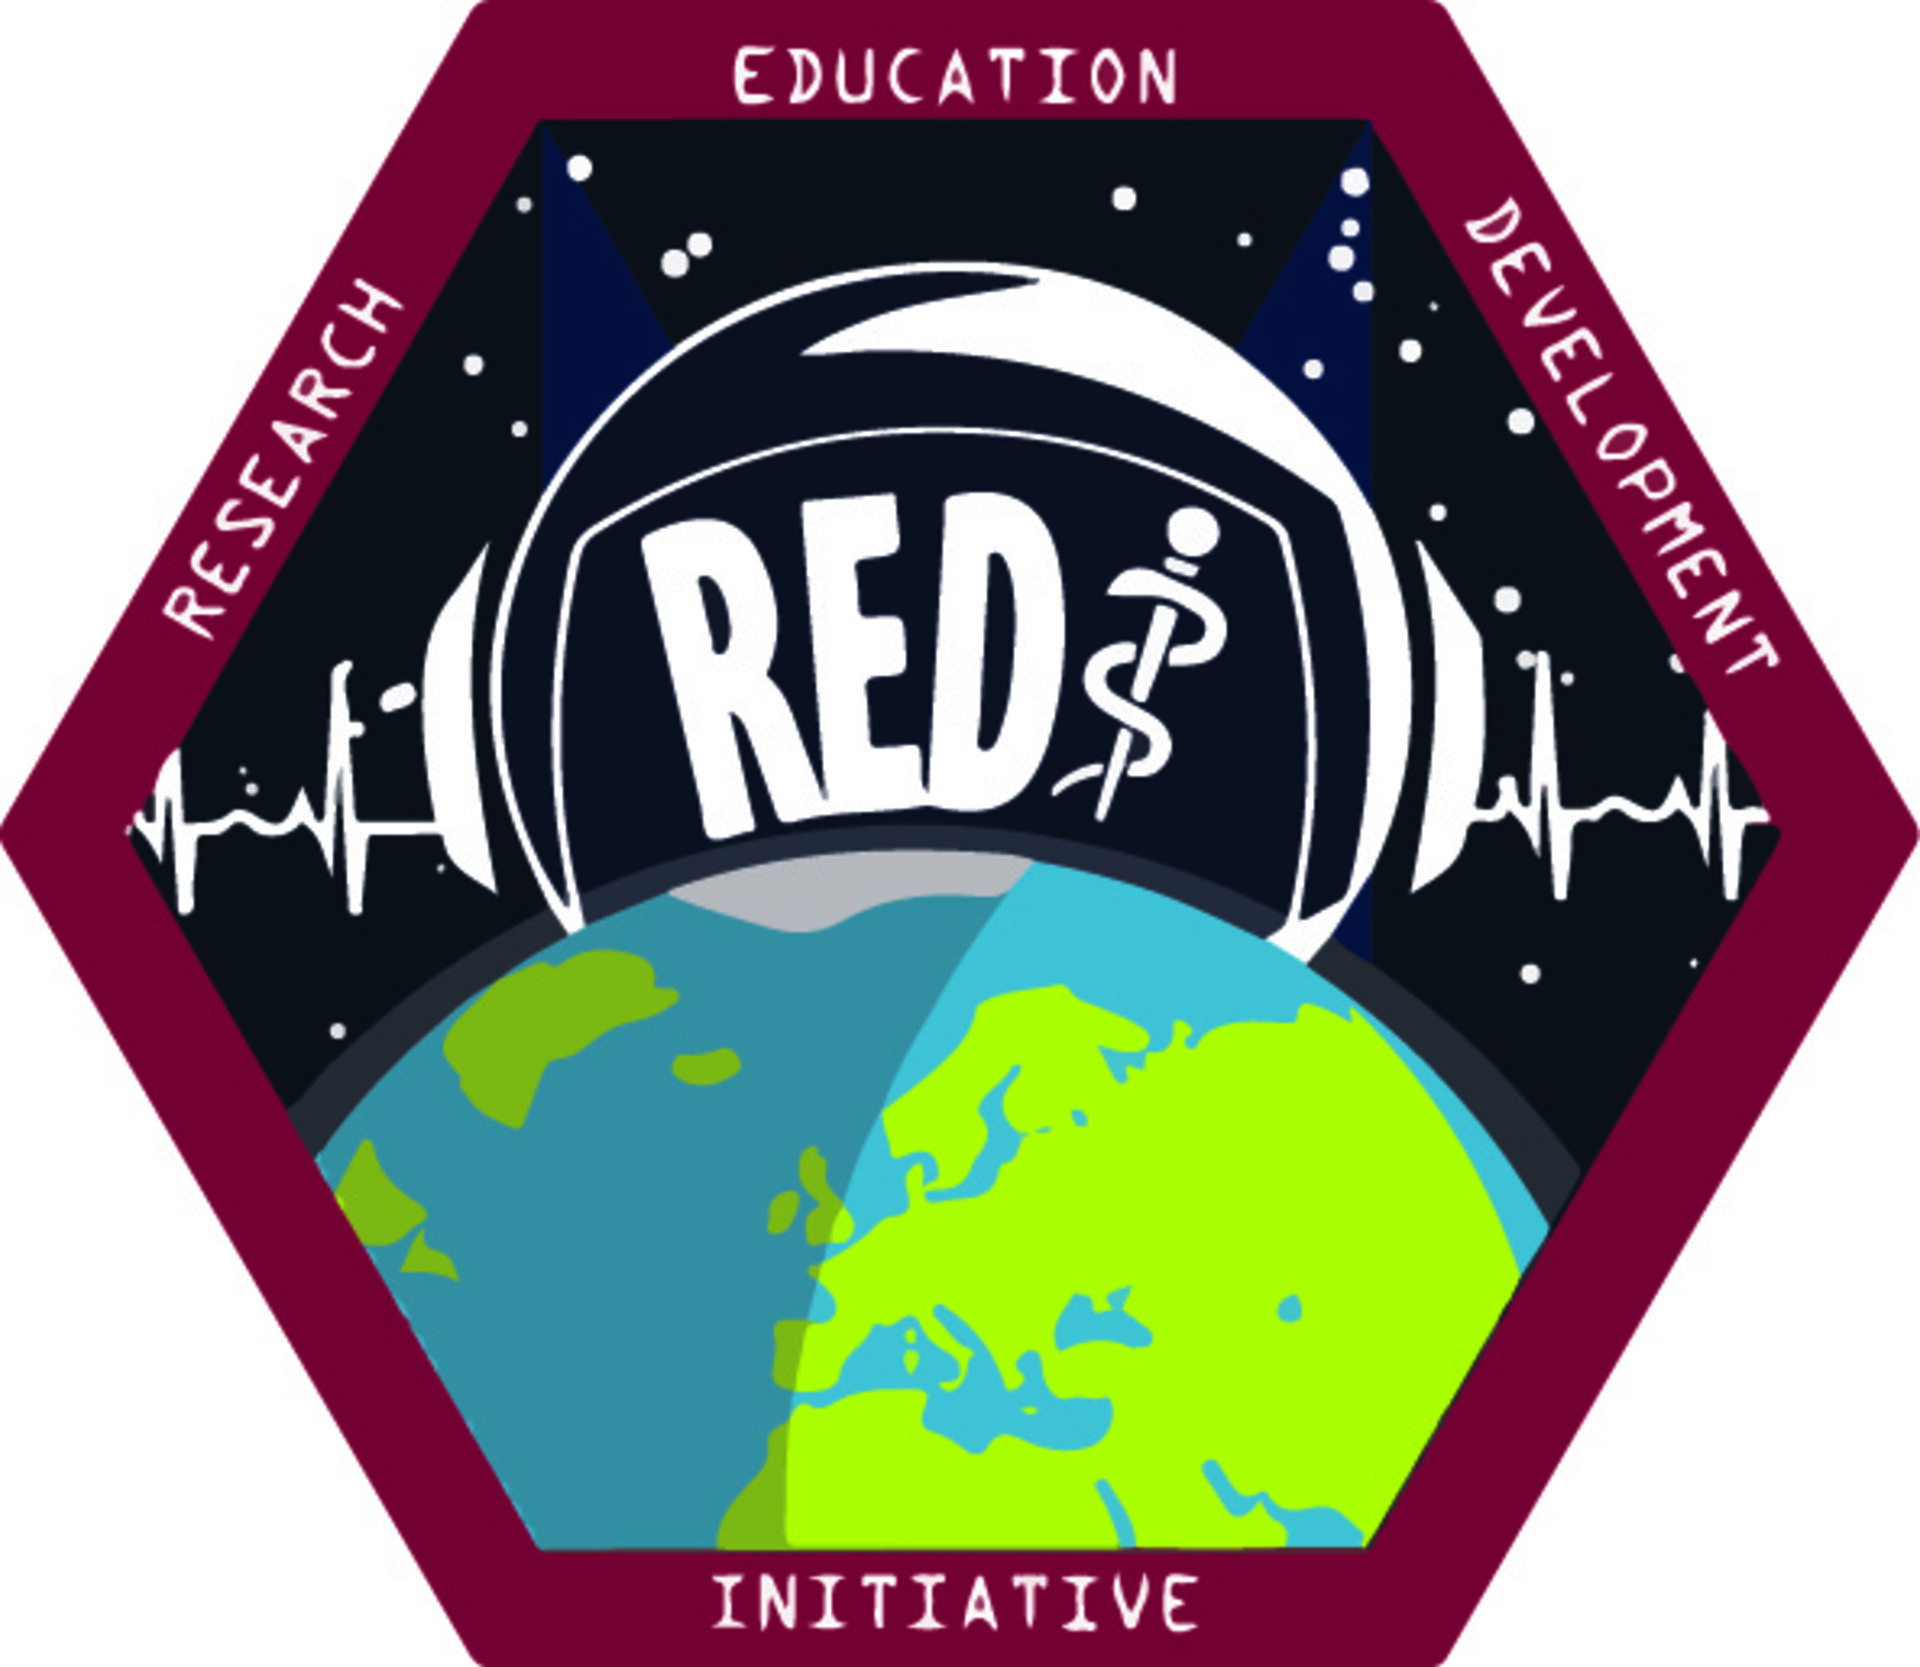 Research Education Development Initiative patch for space medicine